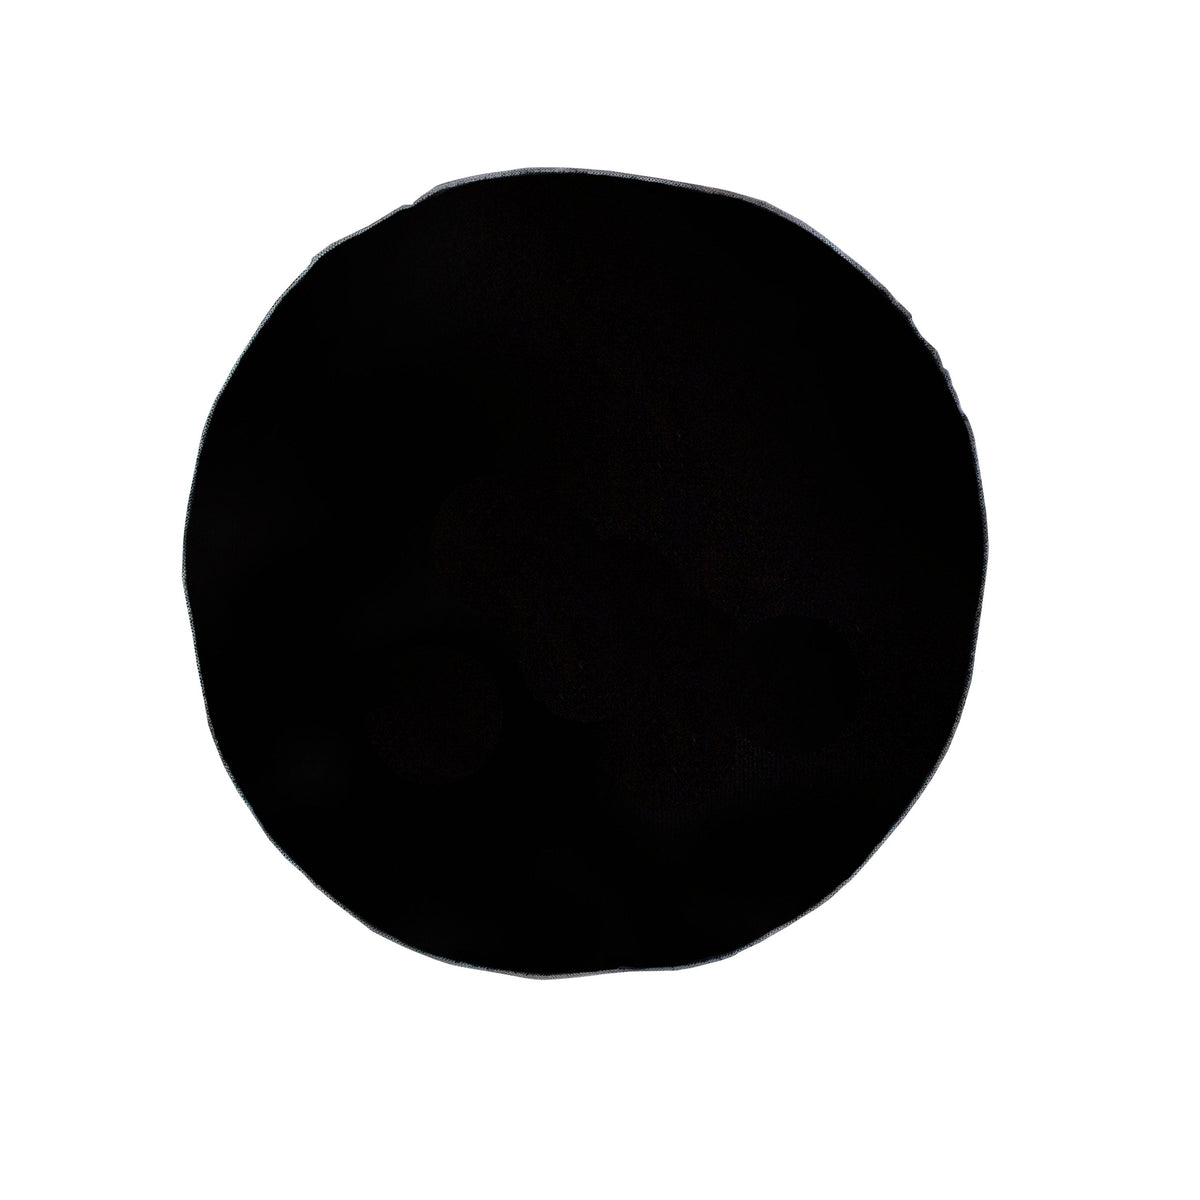 Round Pocket Square in Black with Grey Edges-Pocket Squares-MarZthomson-Cufflinks.com.sg